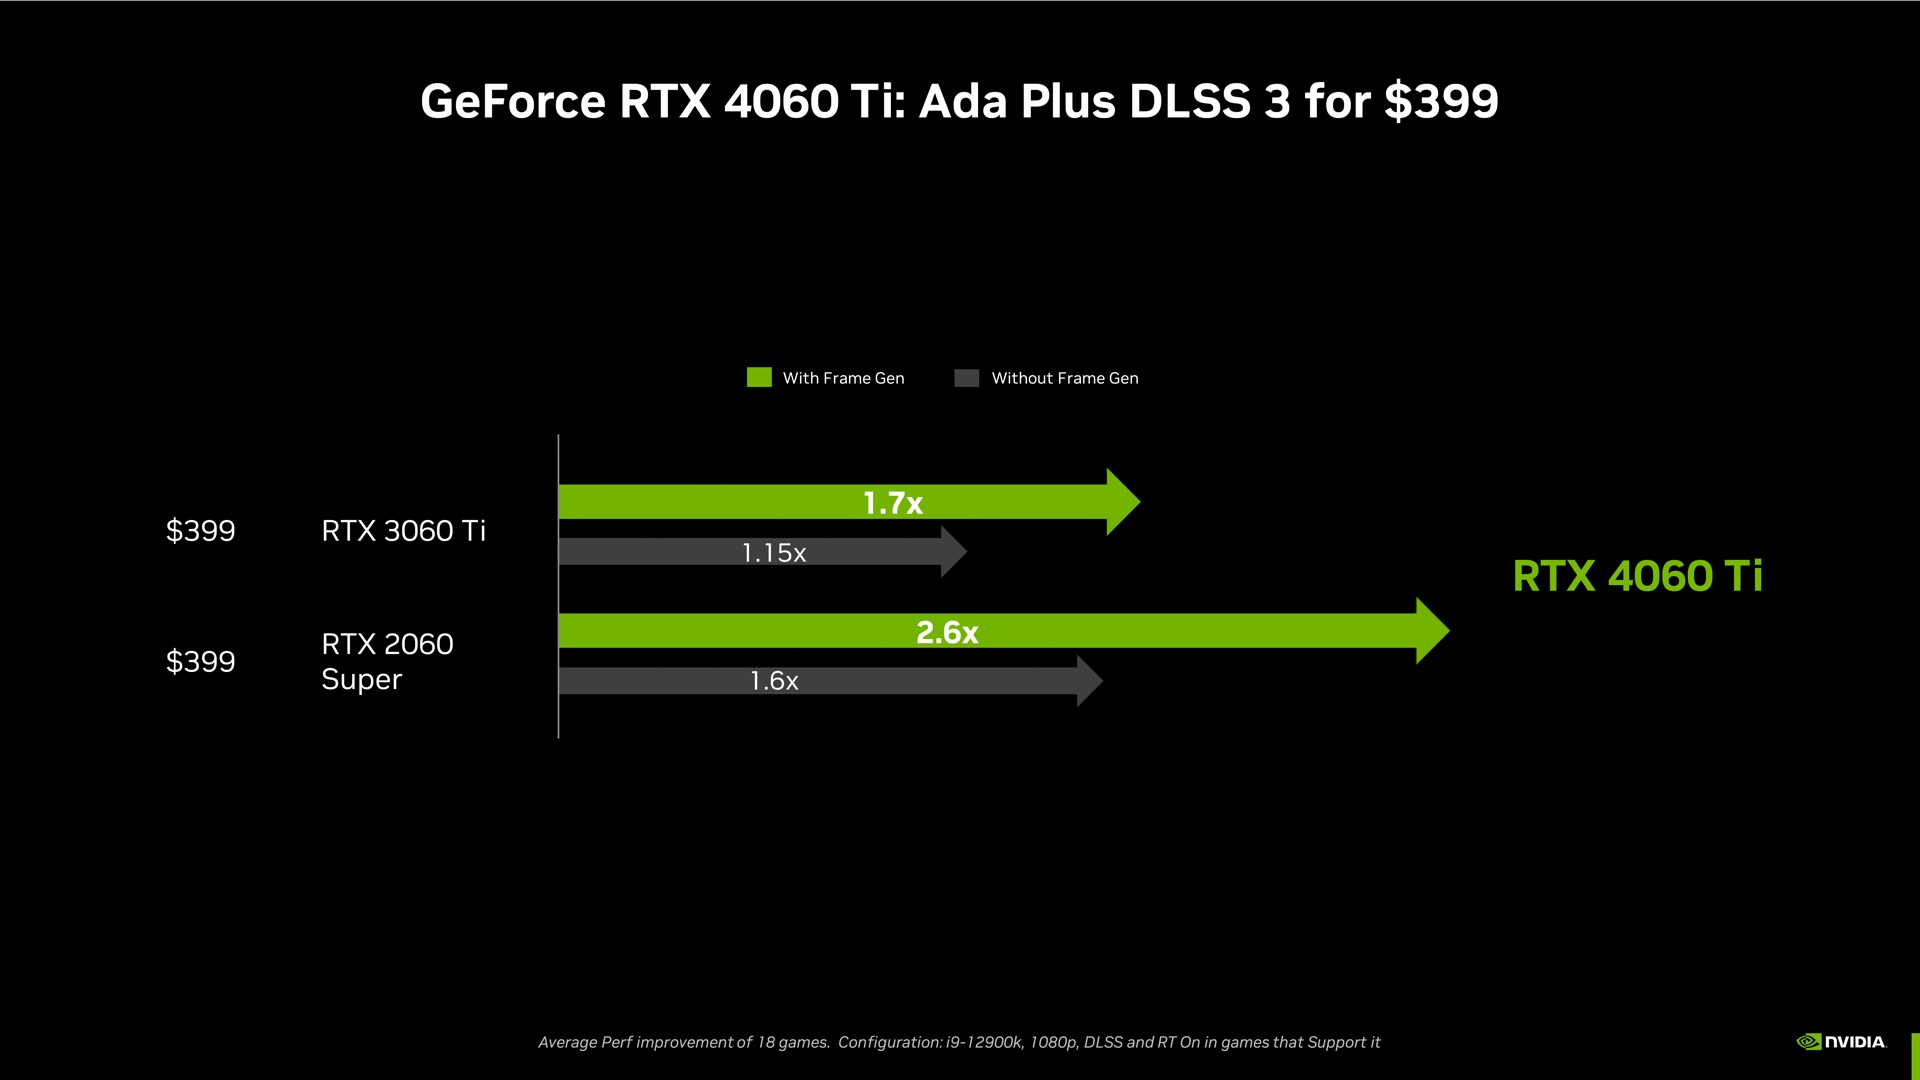 NVIDIA RTX 4060 Ti vs RTX 3060 Ti: Which One is Better?